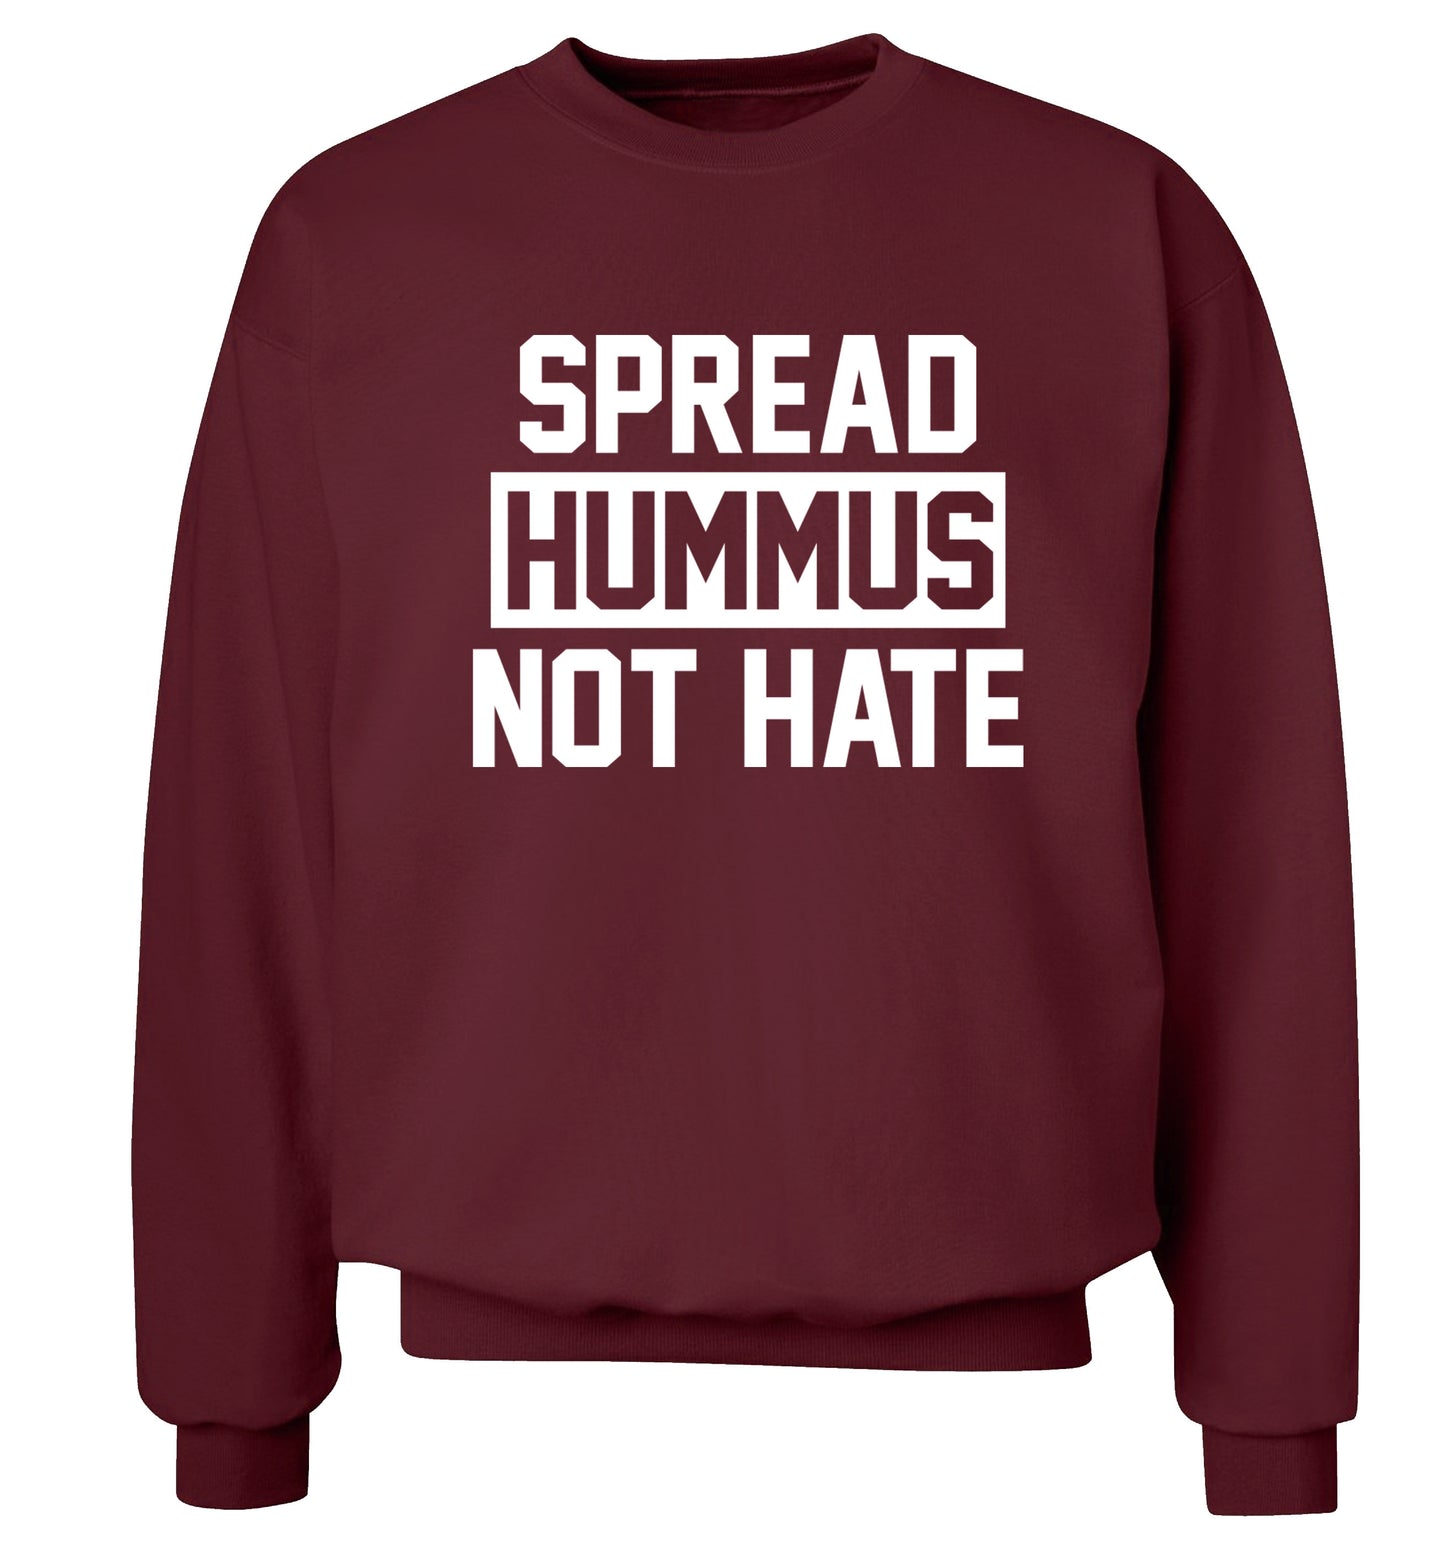 Spread hummus not hate Adult's unisex maroon Sweater 2XL